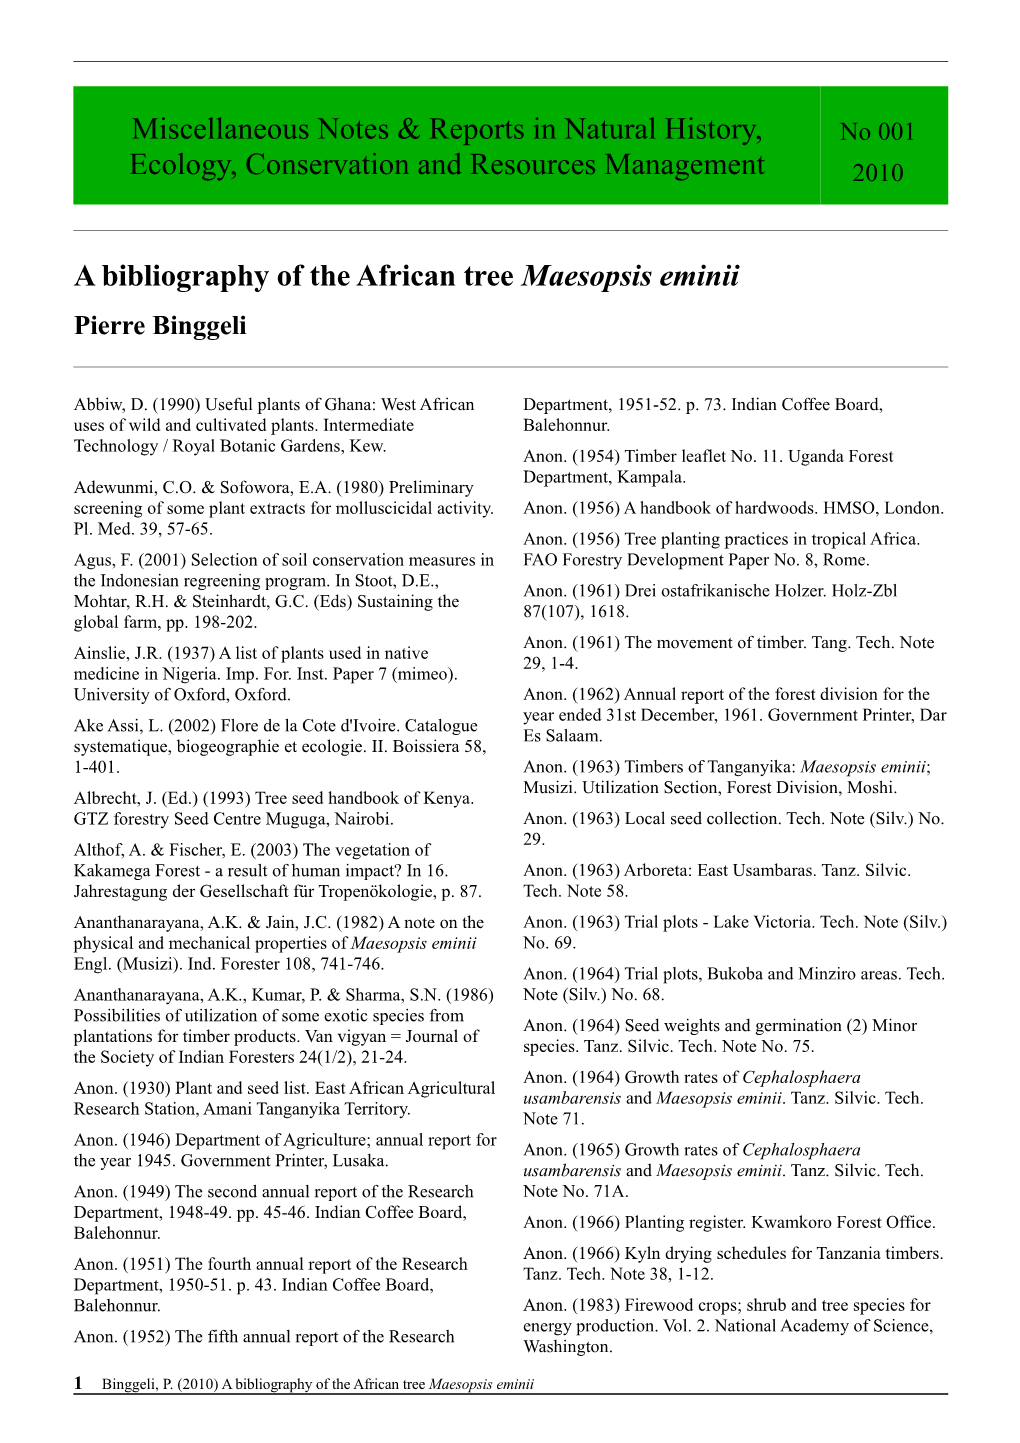 A Bibliography of the African Tree Maesopsis Eminii Pierre Binggeli